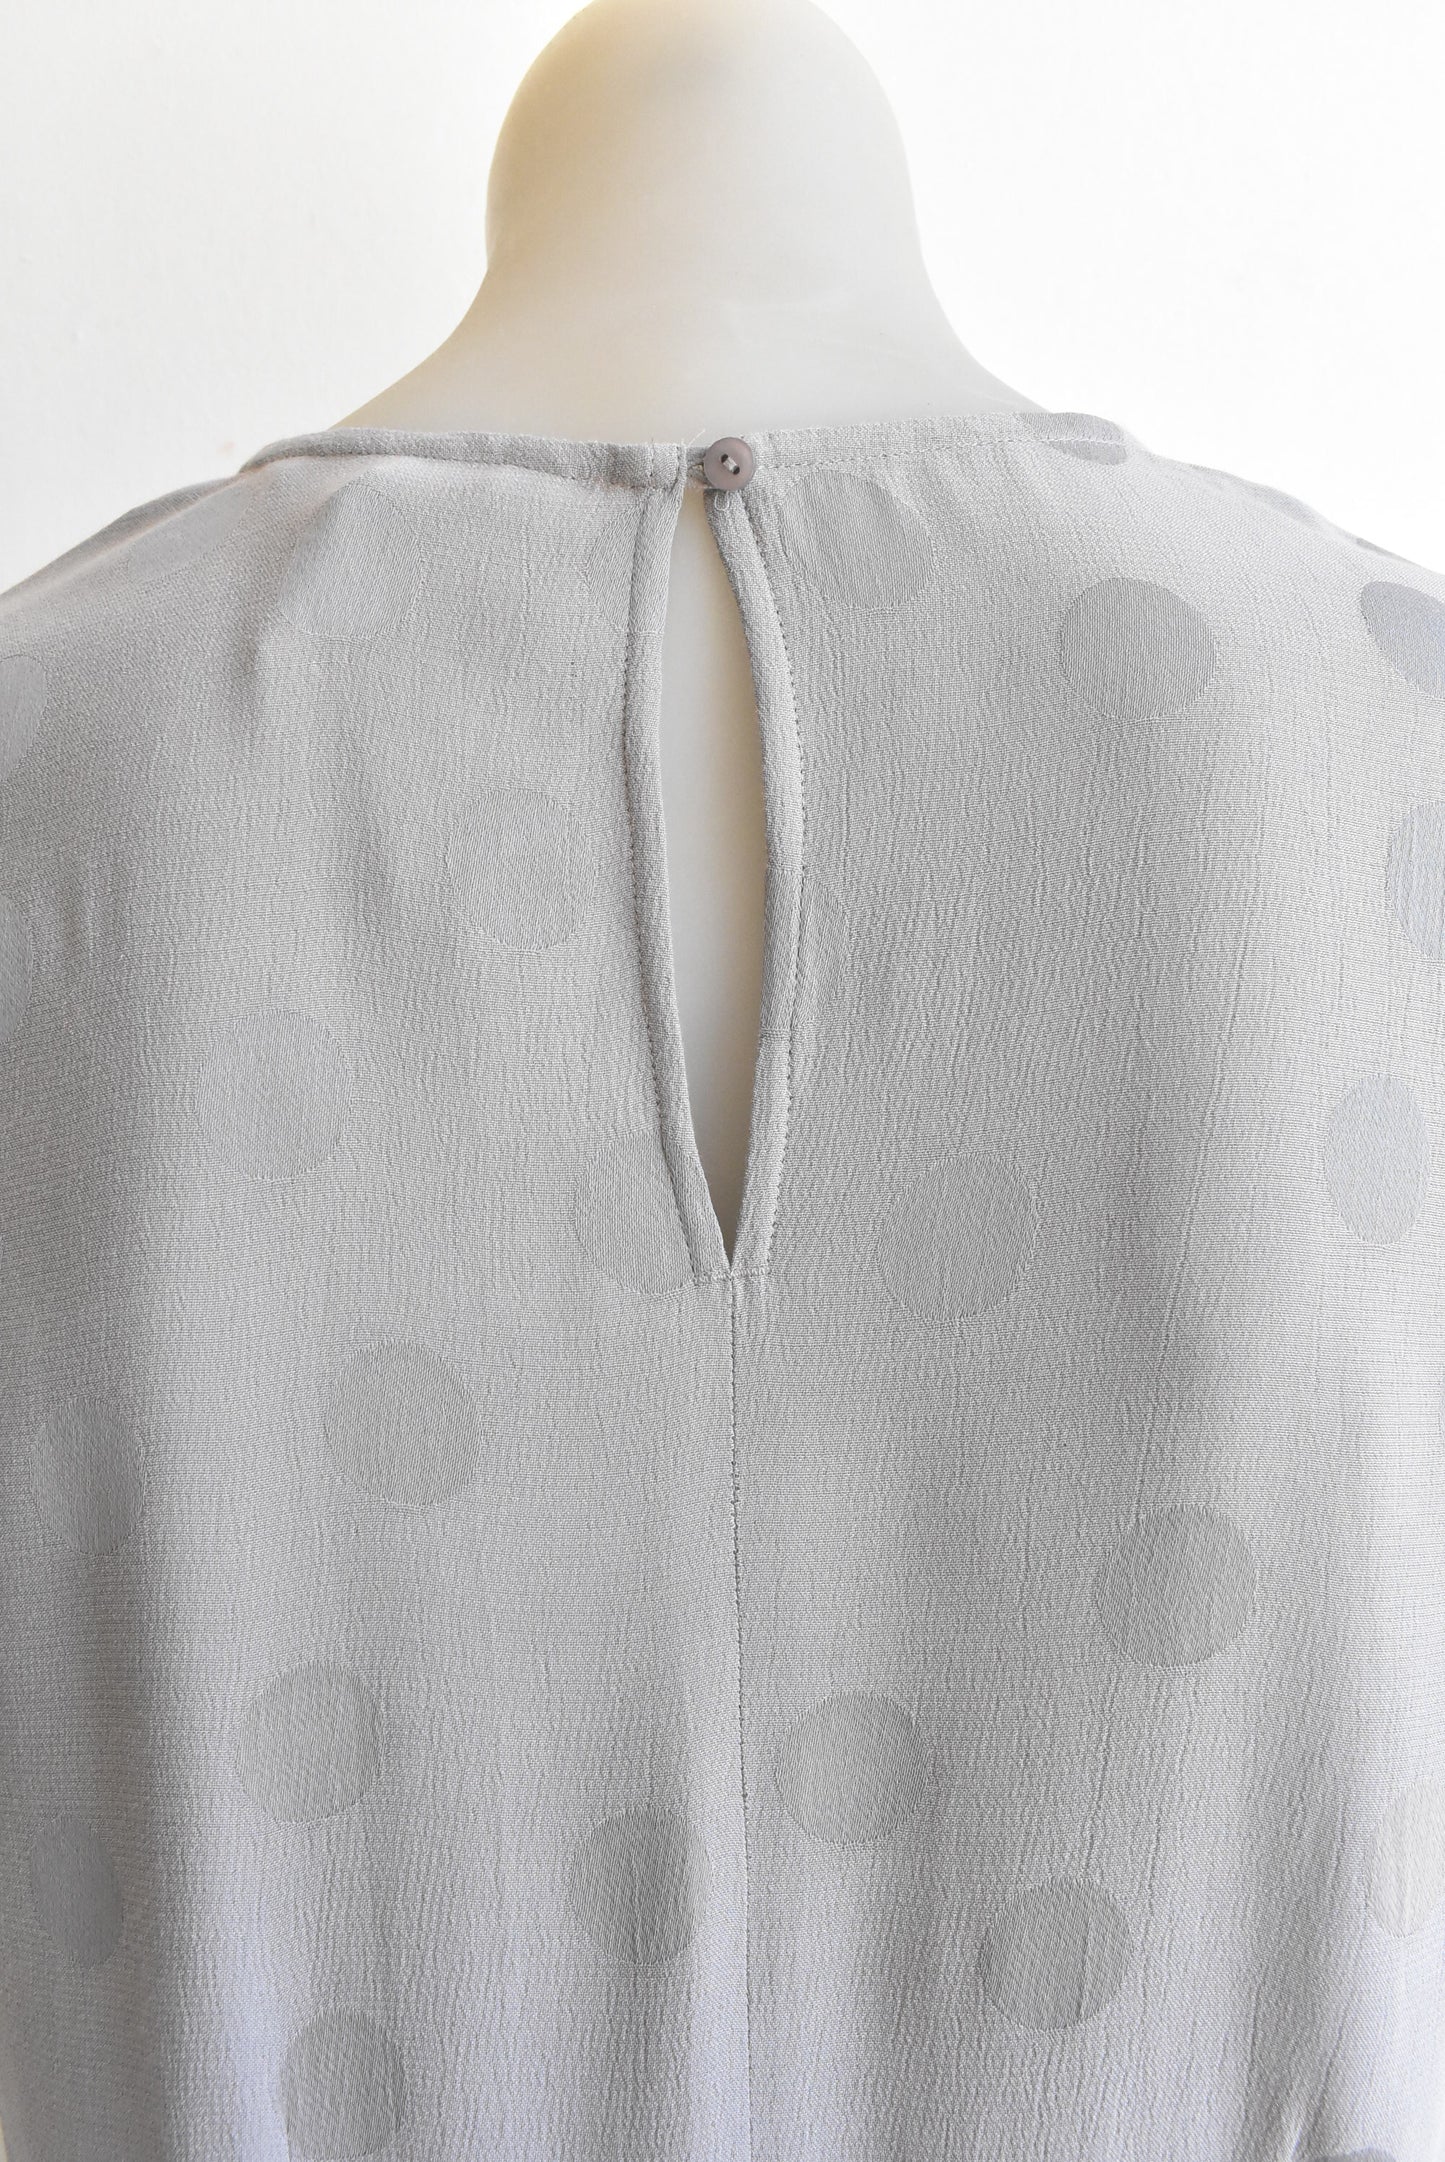 NEW Next silvery grey polka dot dress, size 12